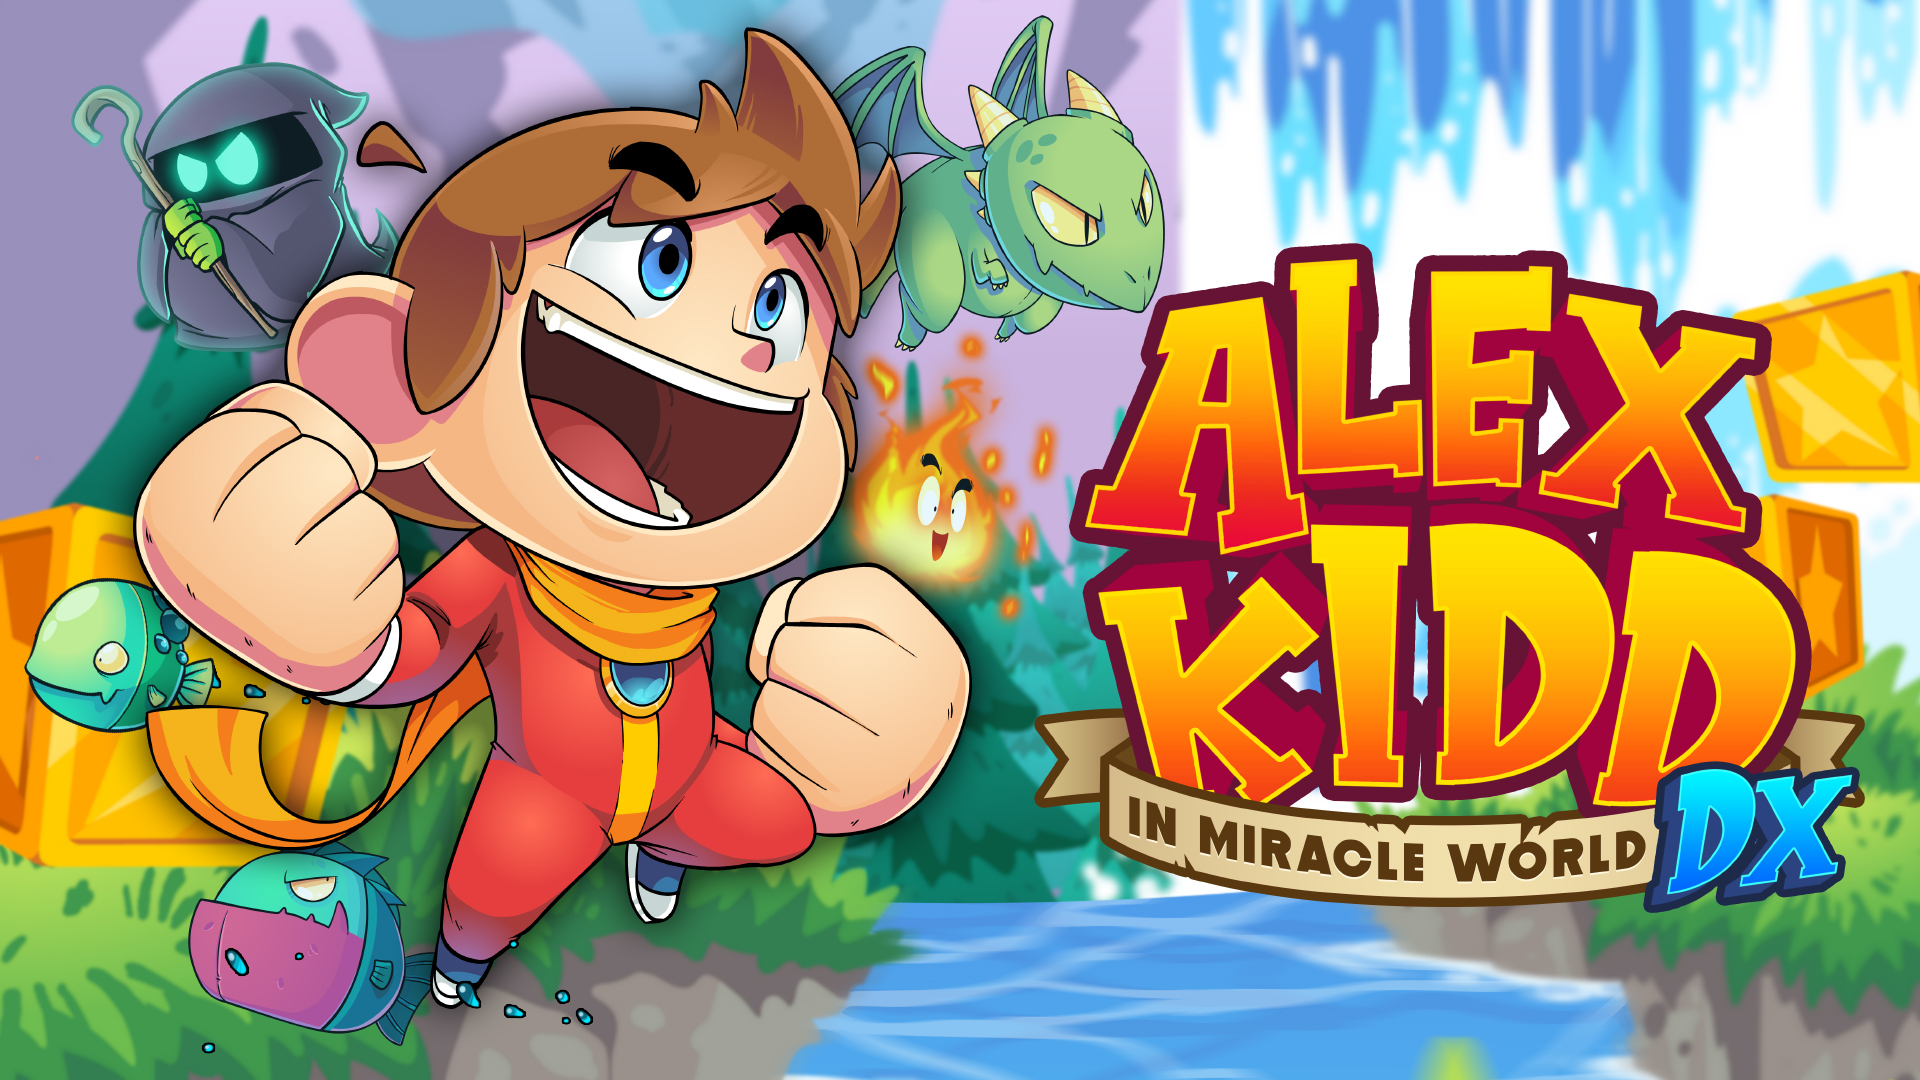 Jogos: Alex Kidd in Miracle World DX tem lançamento adiantado